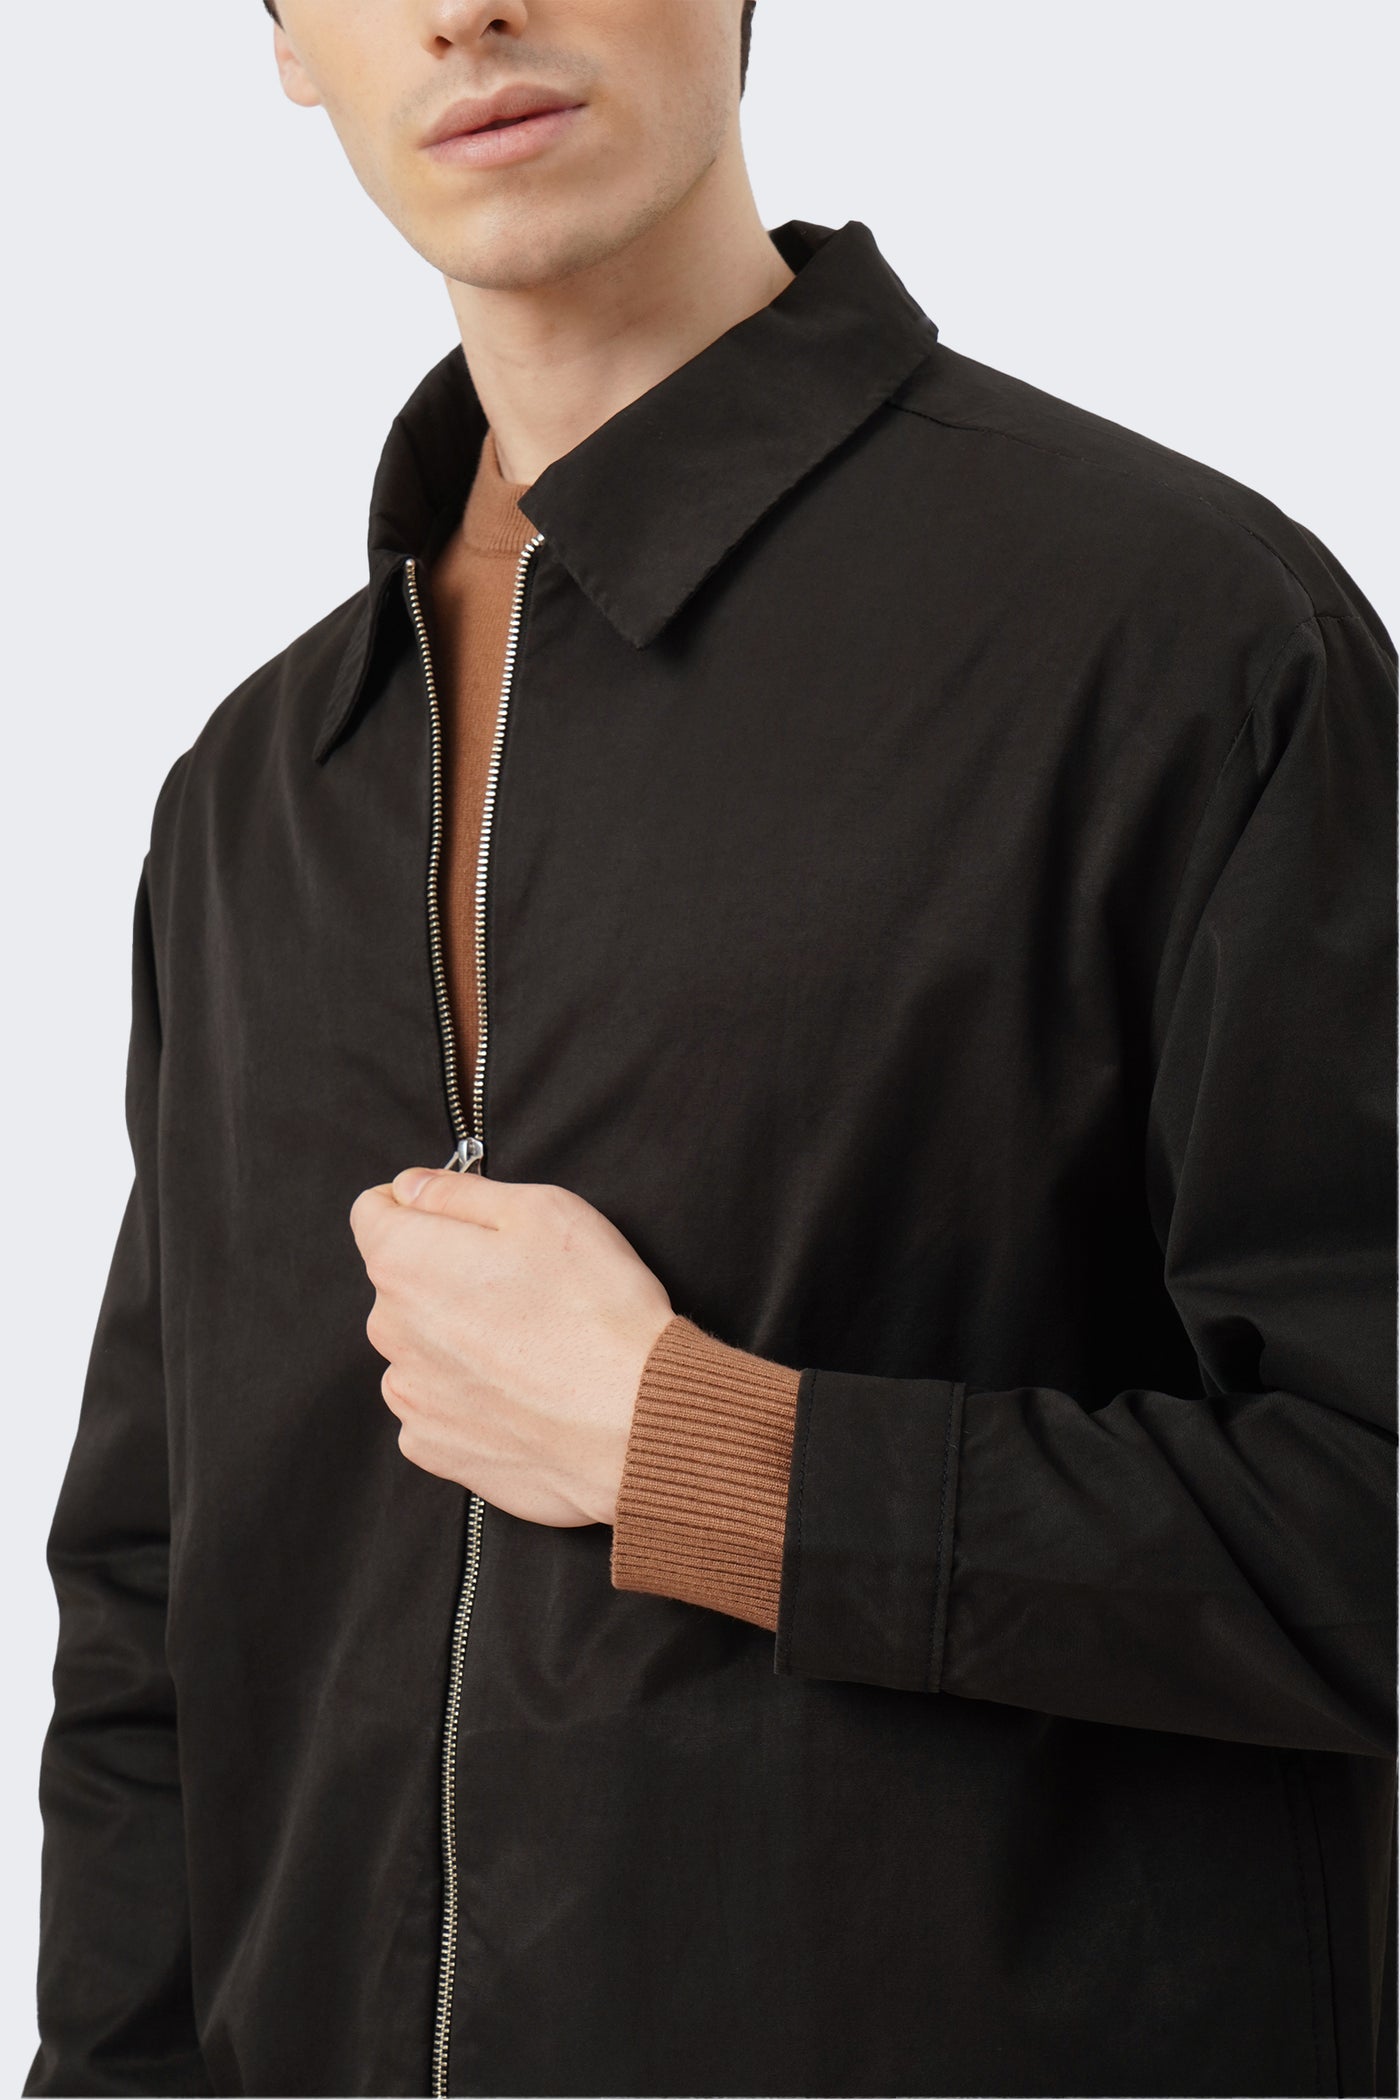 Men's Pointed Collared Zip Up Jacket